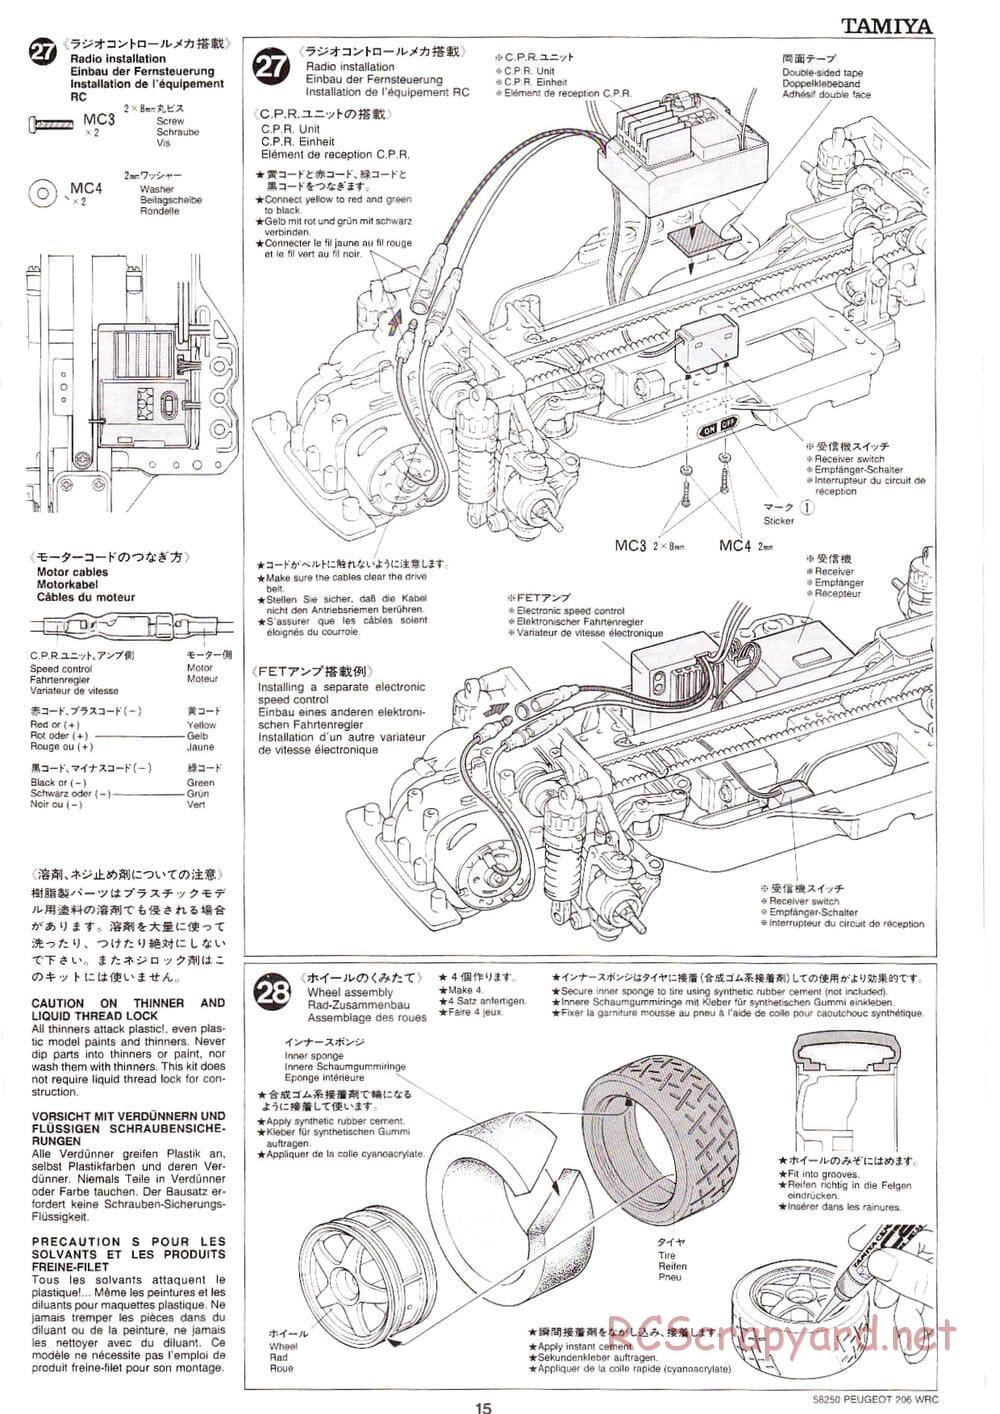 Tamiya - Peugeot 206 WRC - TA-03FS Chassis - Manual - Page 15